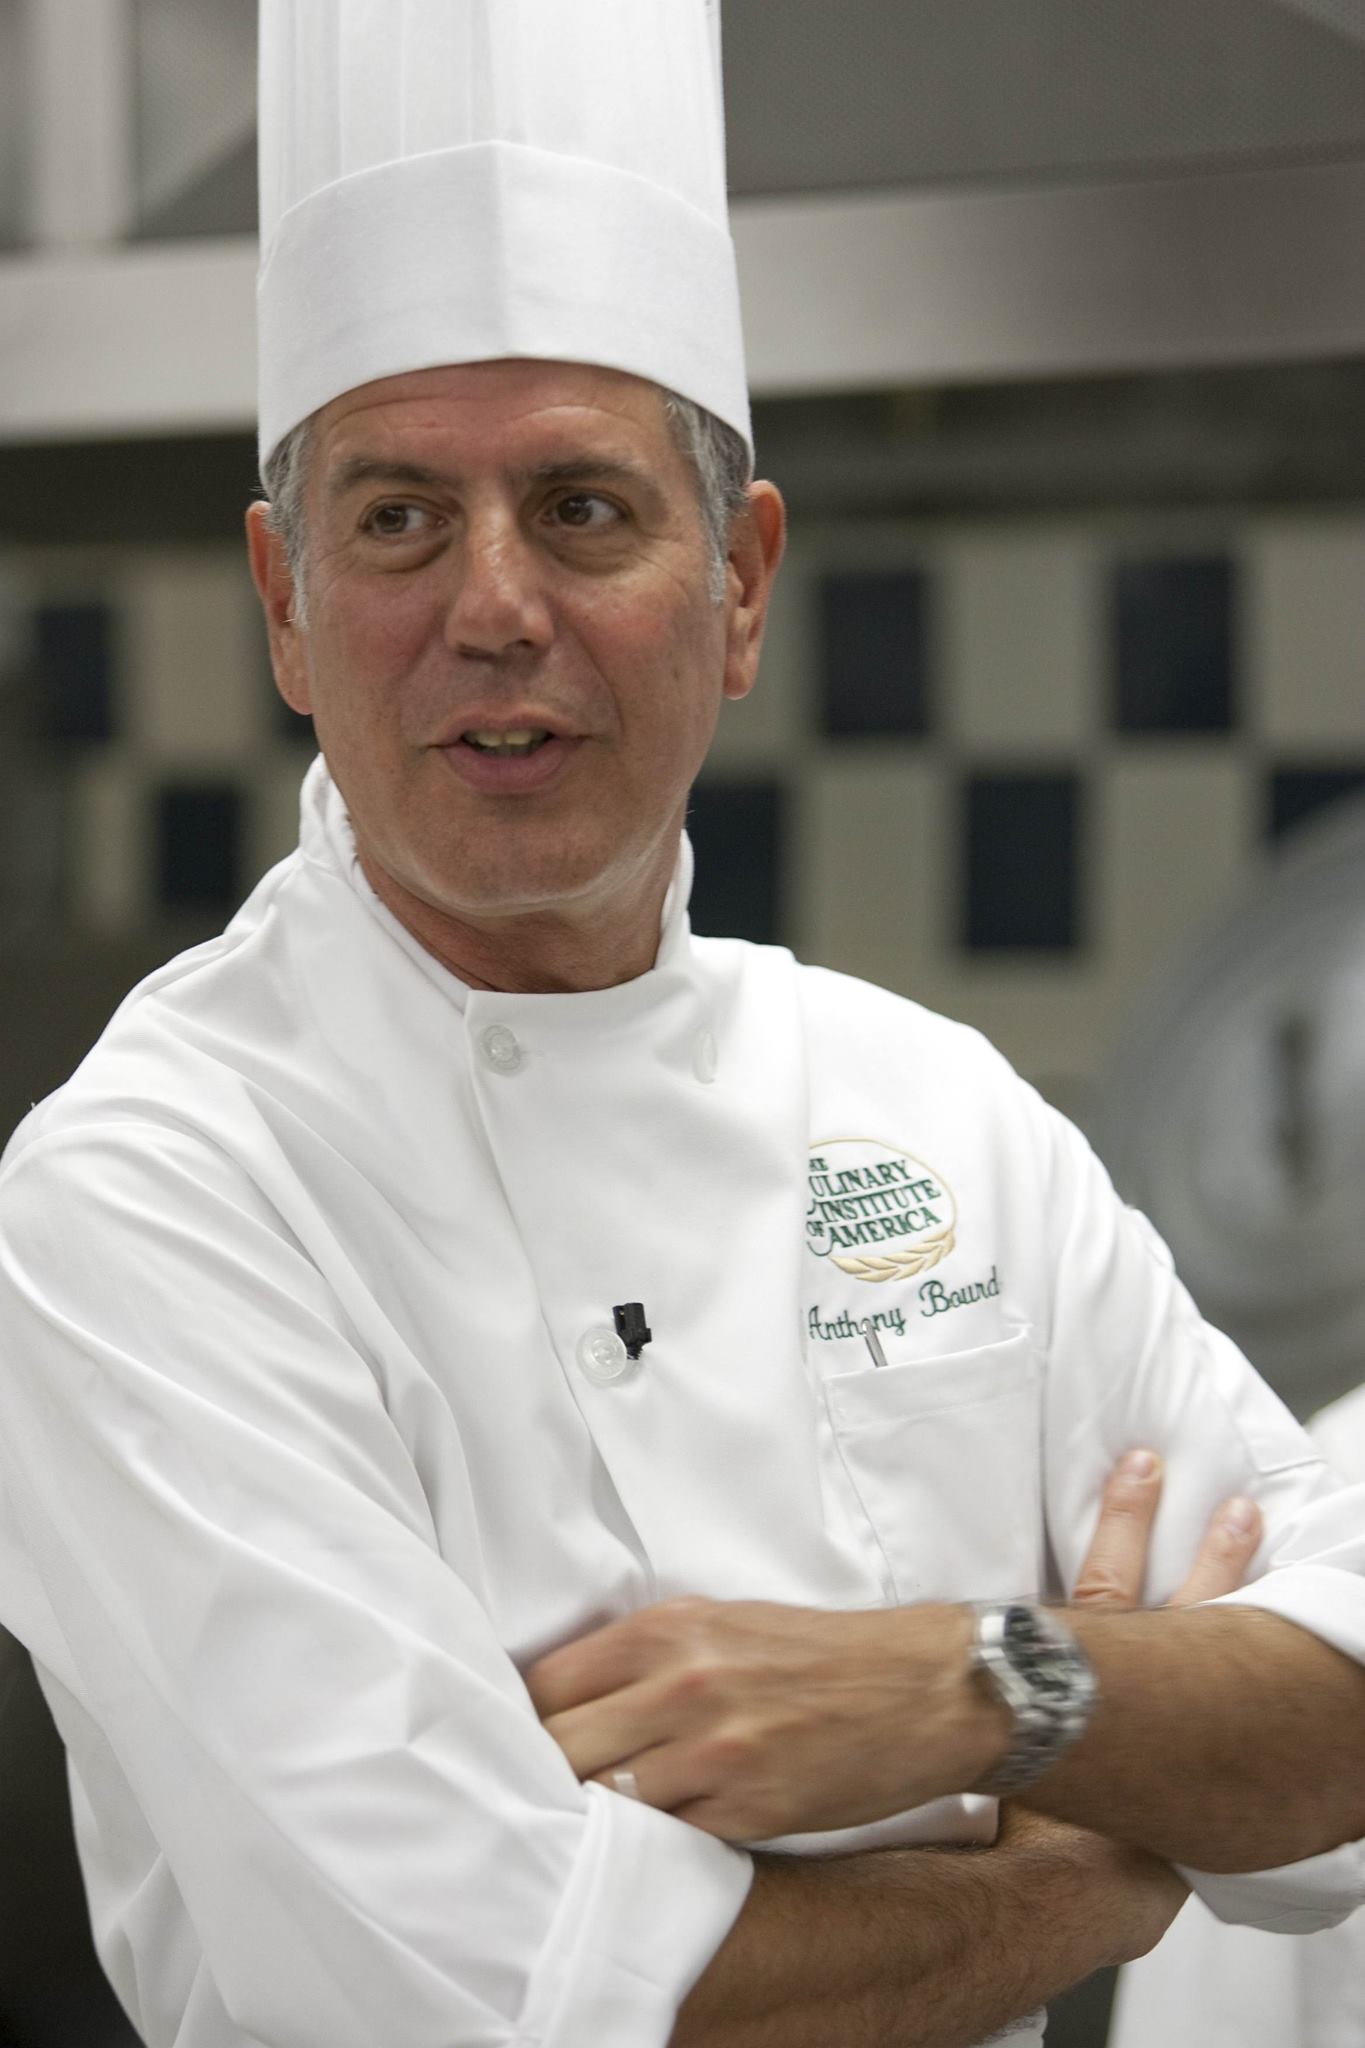 Chef Anthony Bourdain